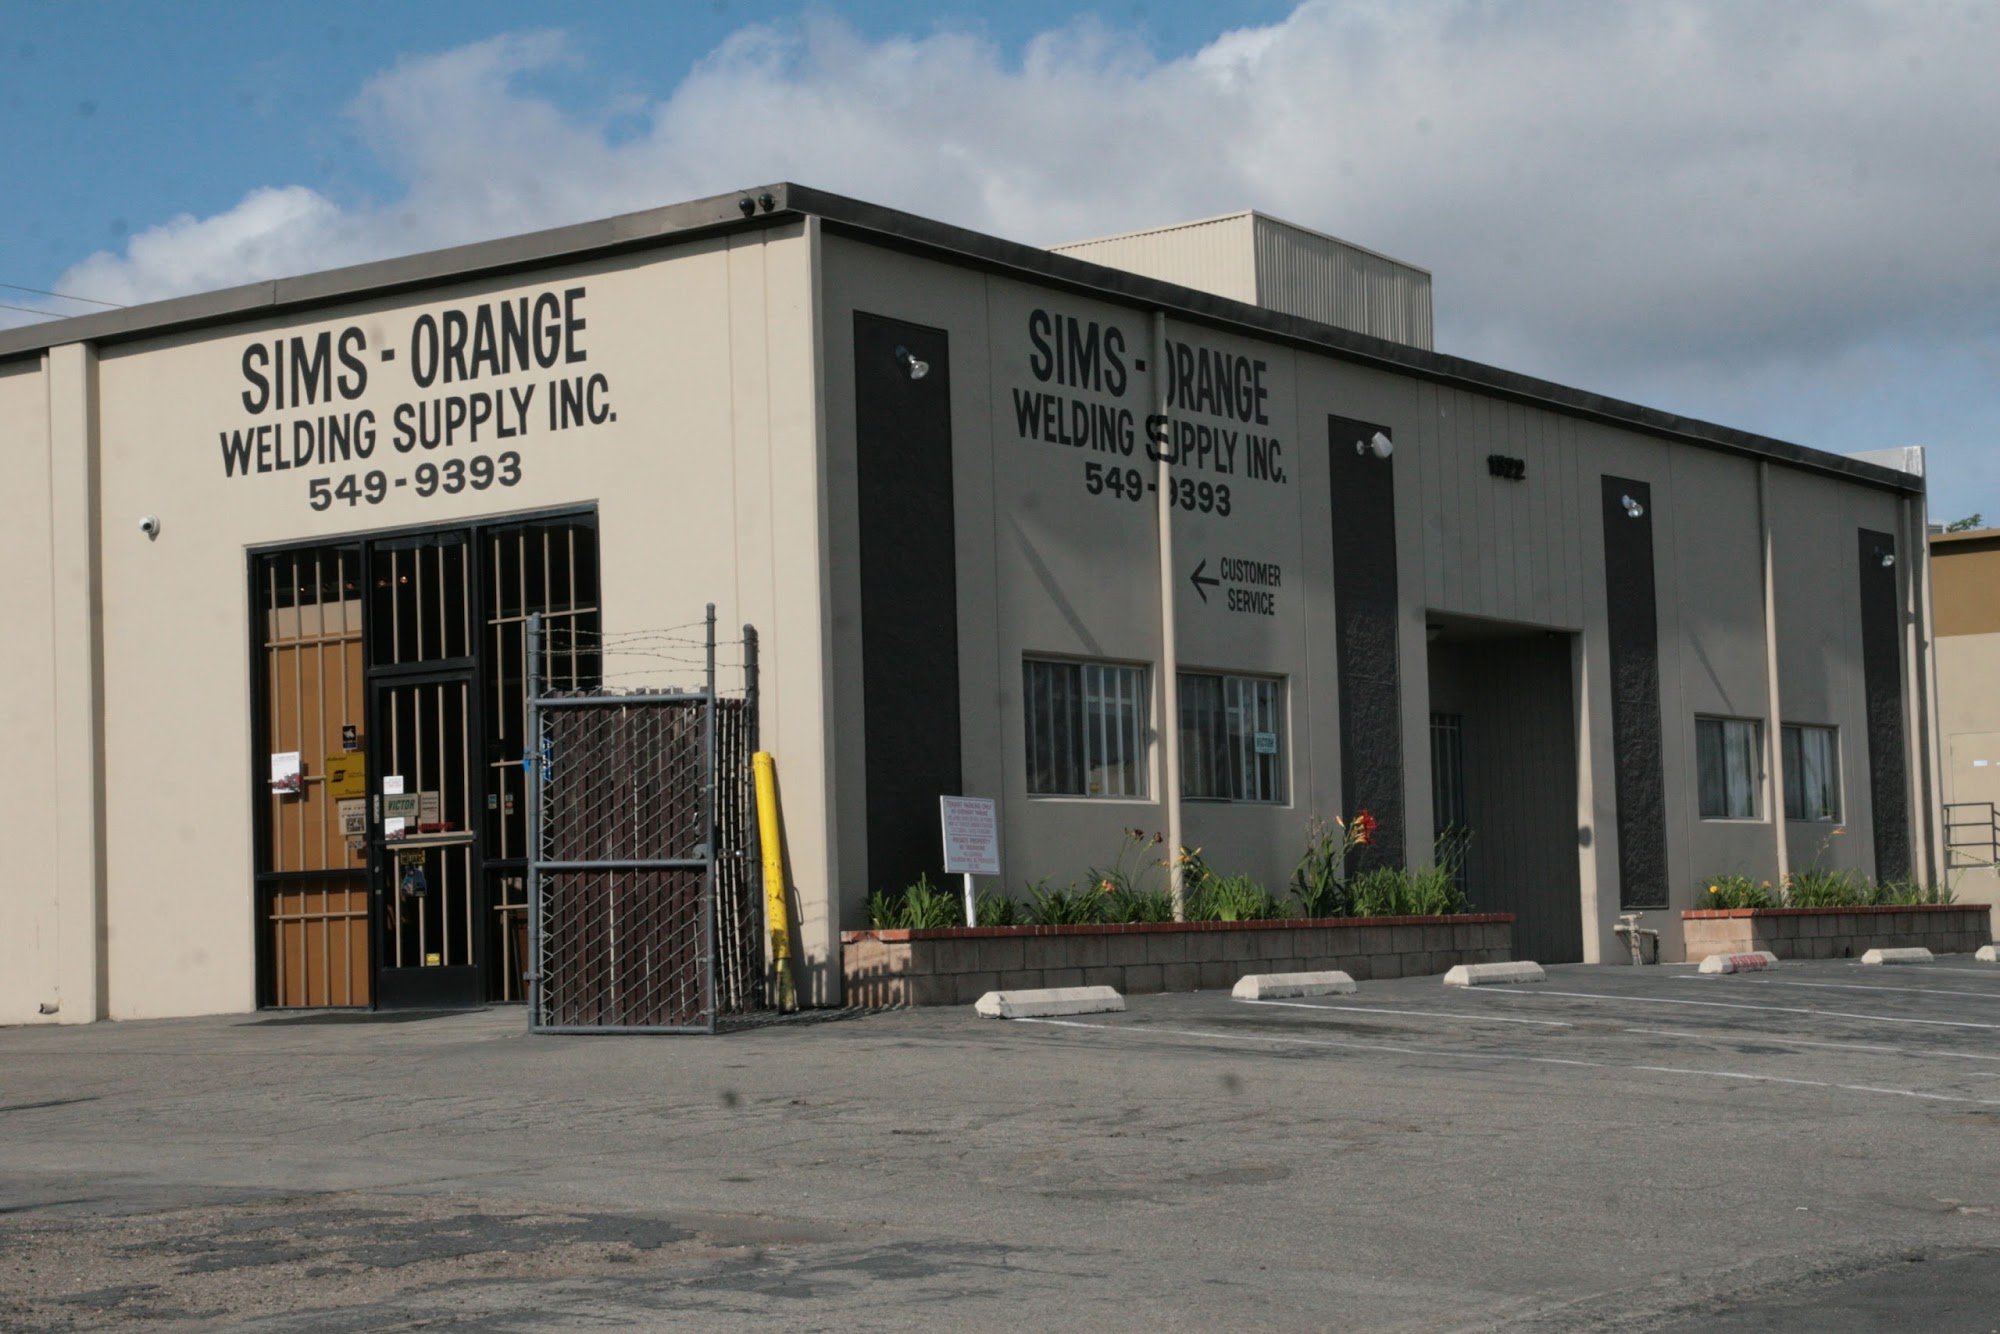 Sims-Orange Welding Supply Inc.